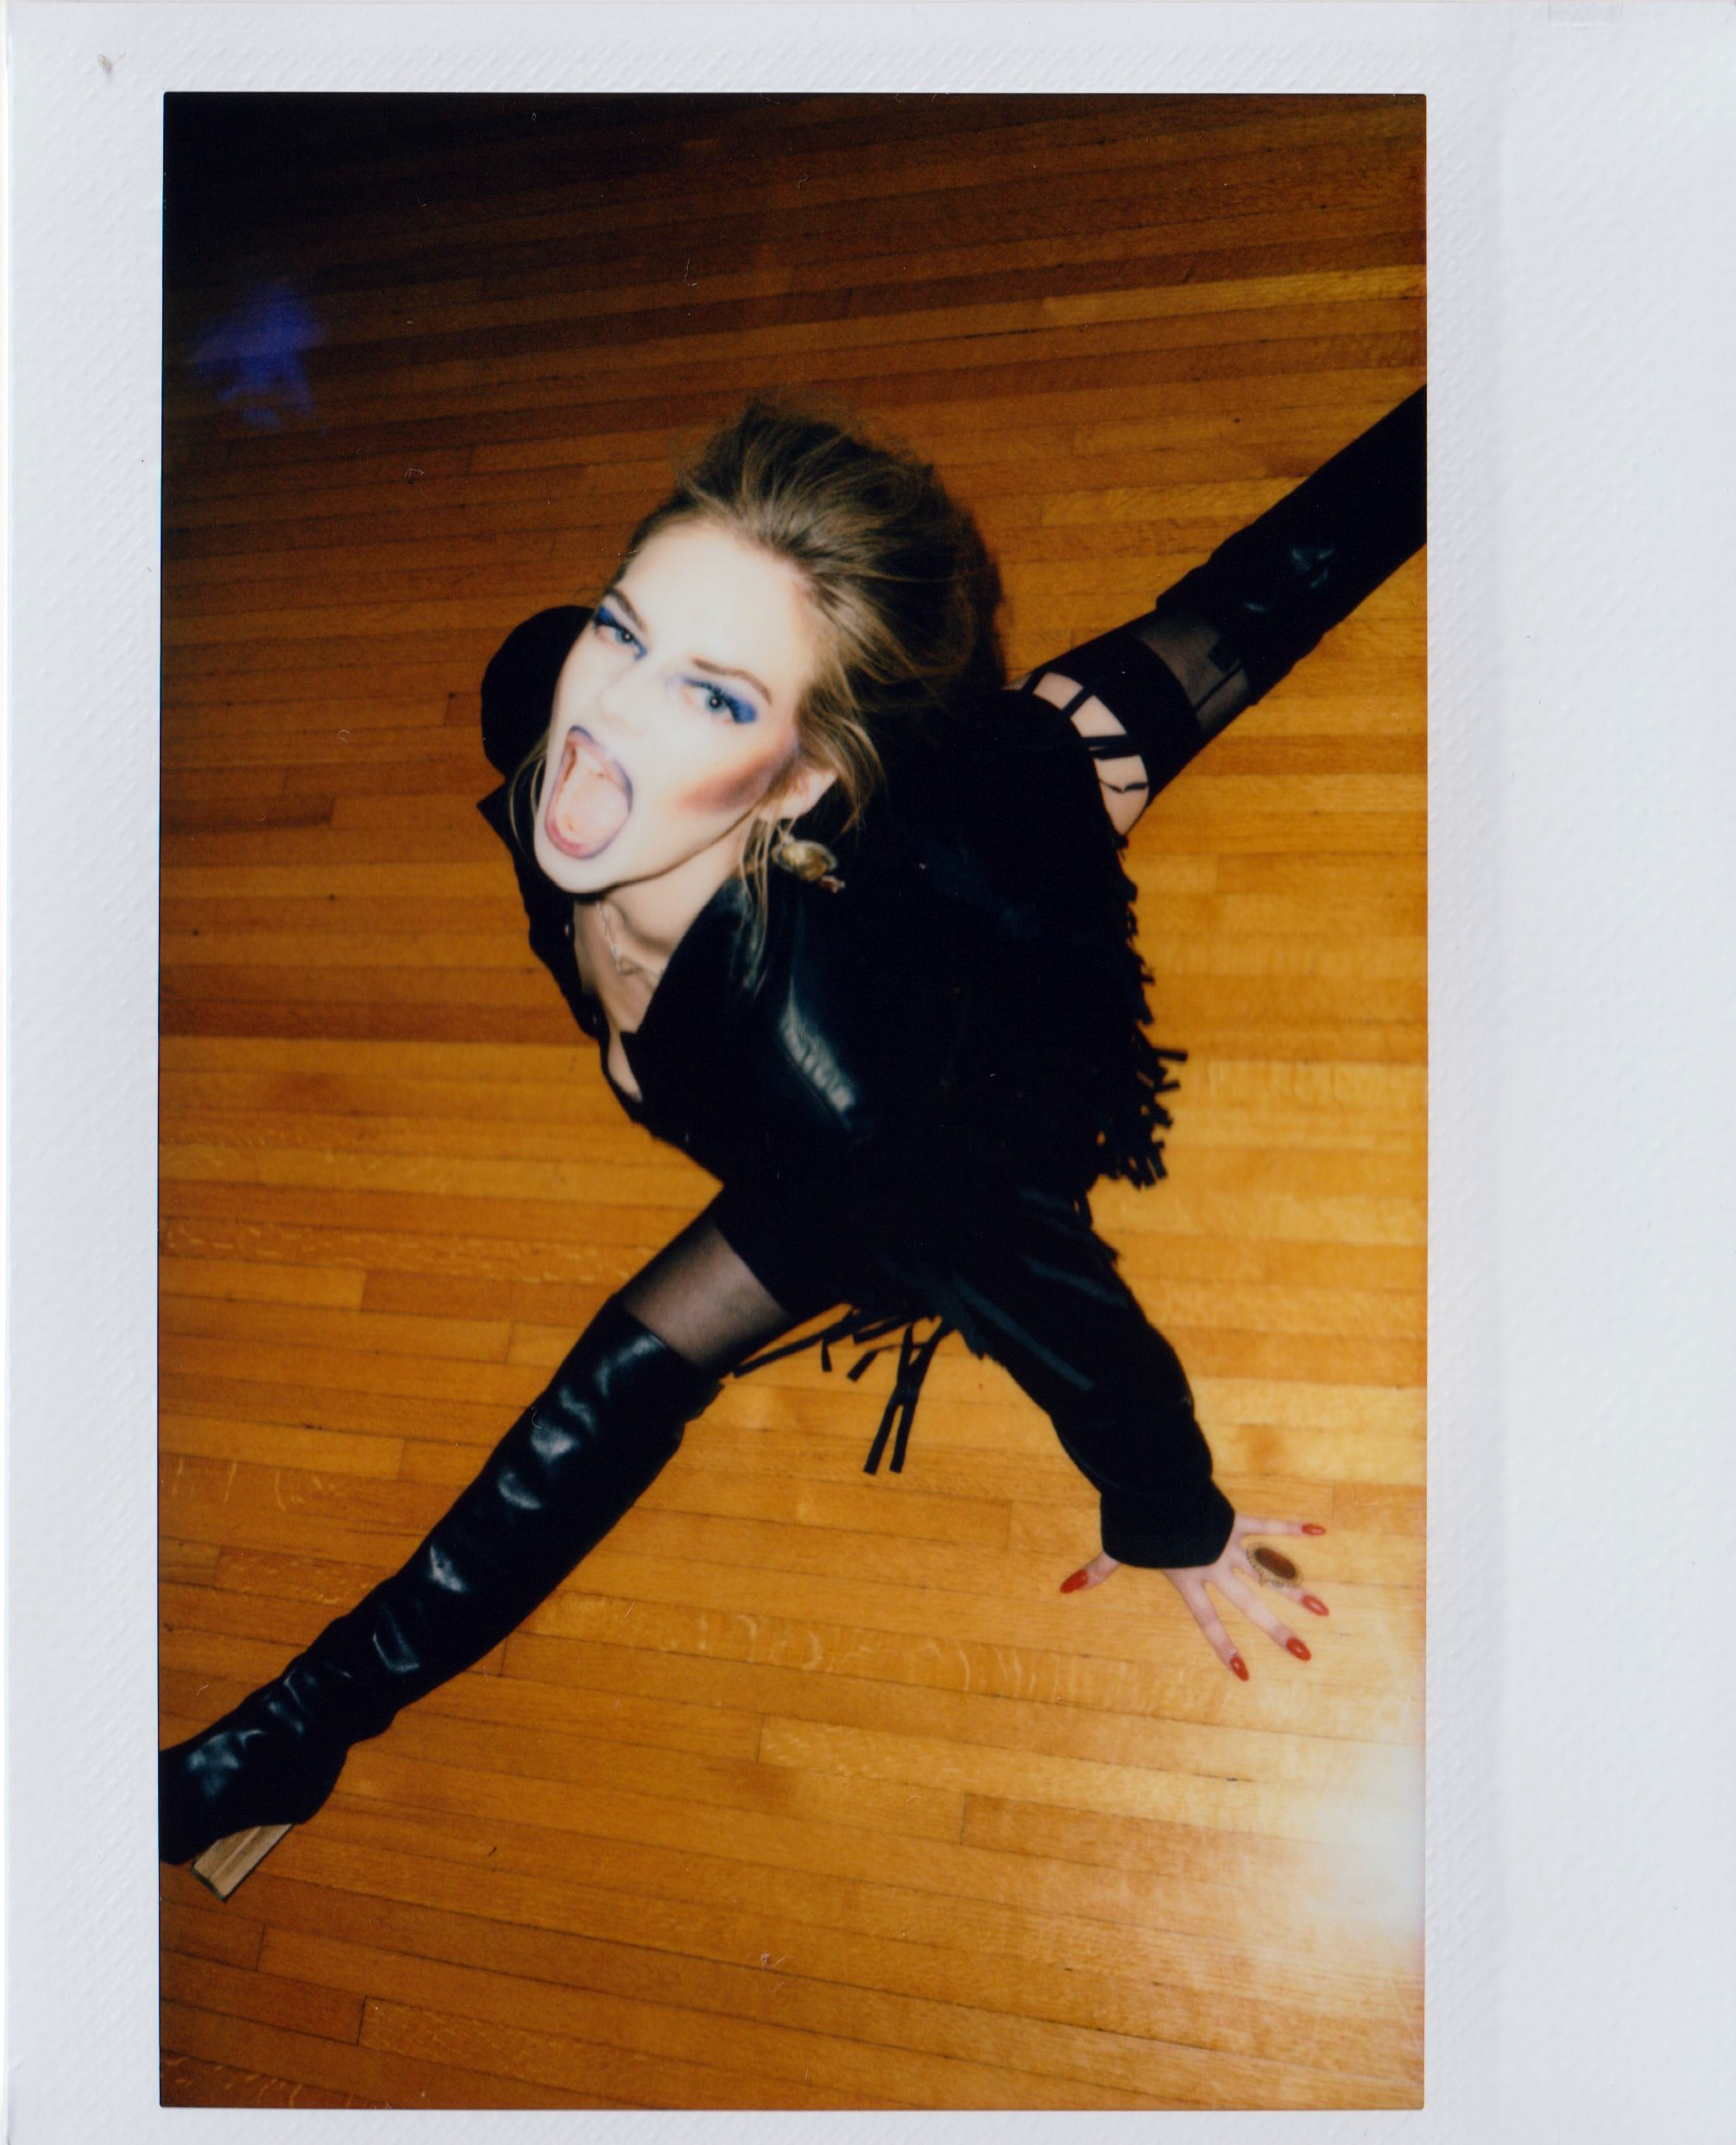 Photos n°2 : Samara Weaving Polaroids!